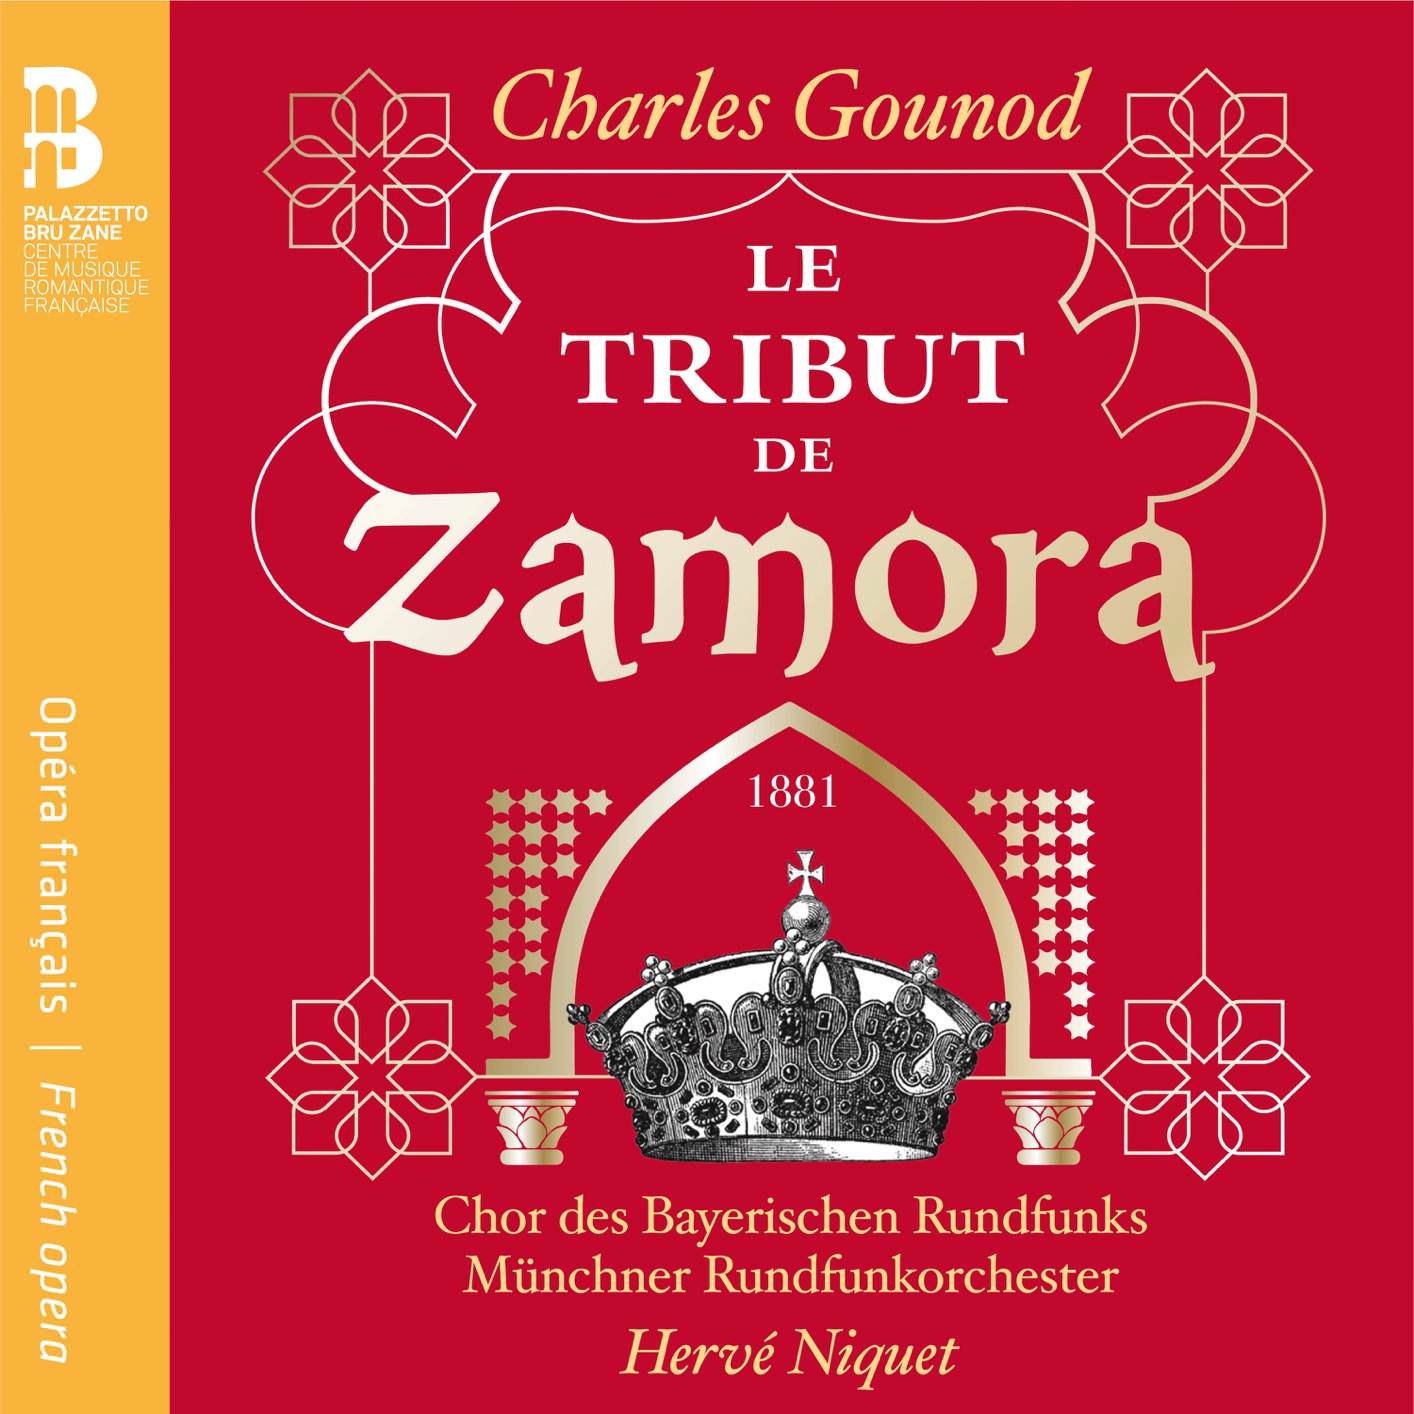 Chor des Bayerischen Rundfunks - Gounod: Le Tribut de Zamora (2018) [FLAC 24bit/48kHz]